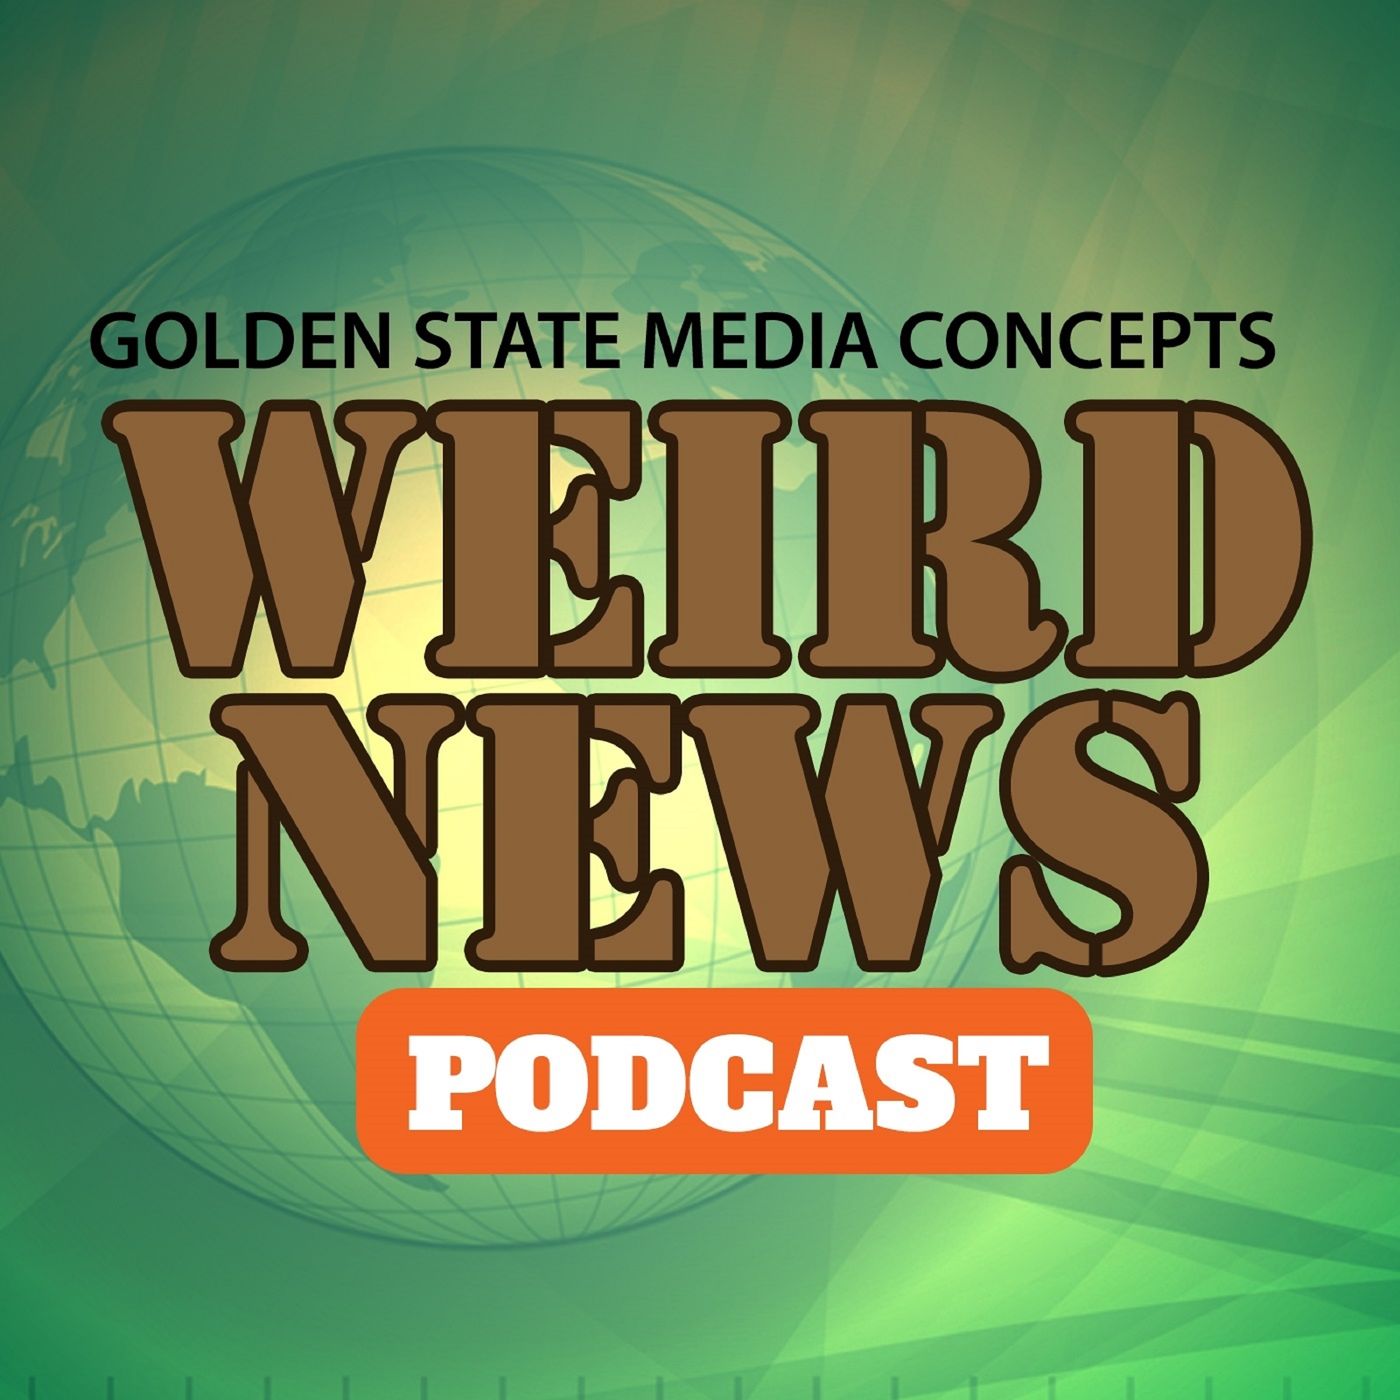 GSMC Weird News Podcast Episode 349: Pokemon Go and the Toilet Paper Burglar